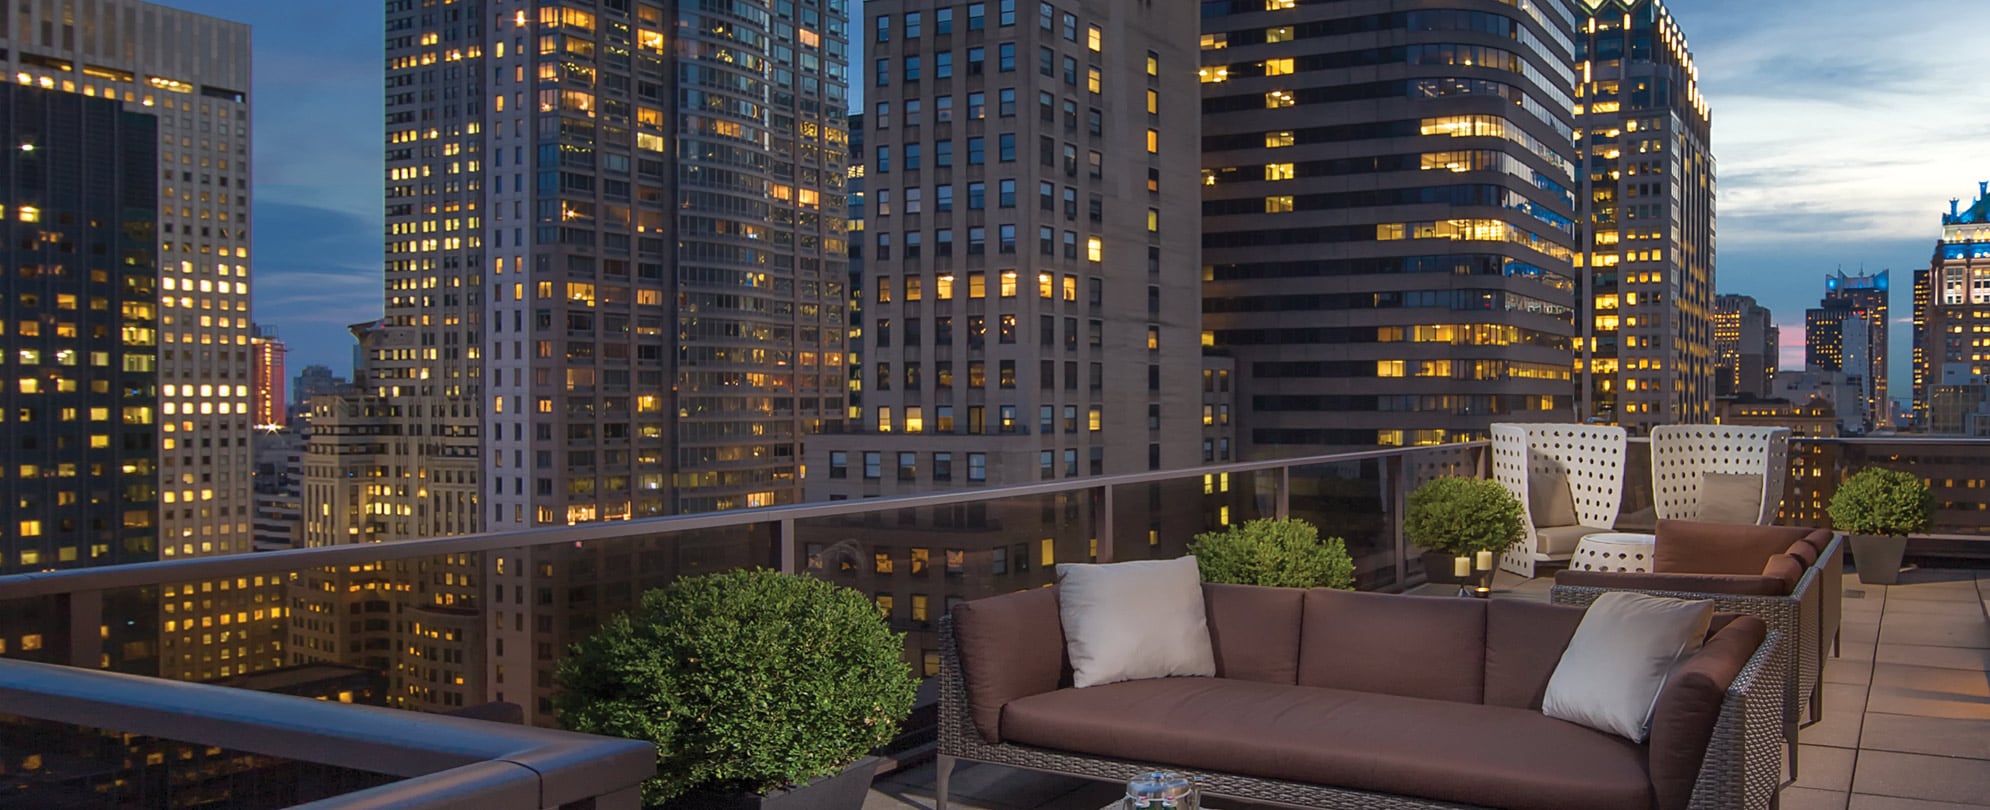 The rooftop terrace of the Club Wyndham Midtown 45 resort overlooking buildings in New York city